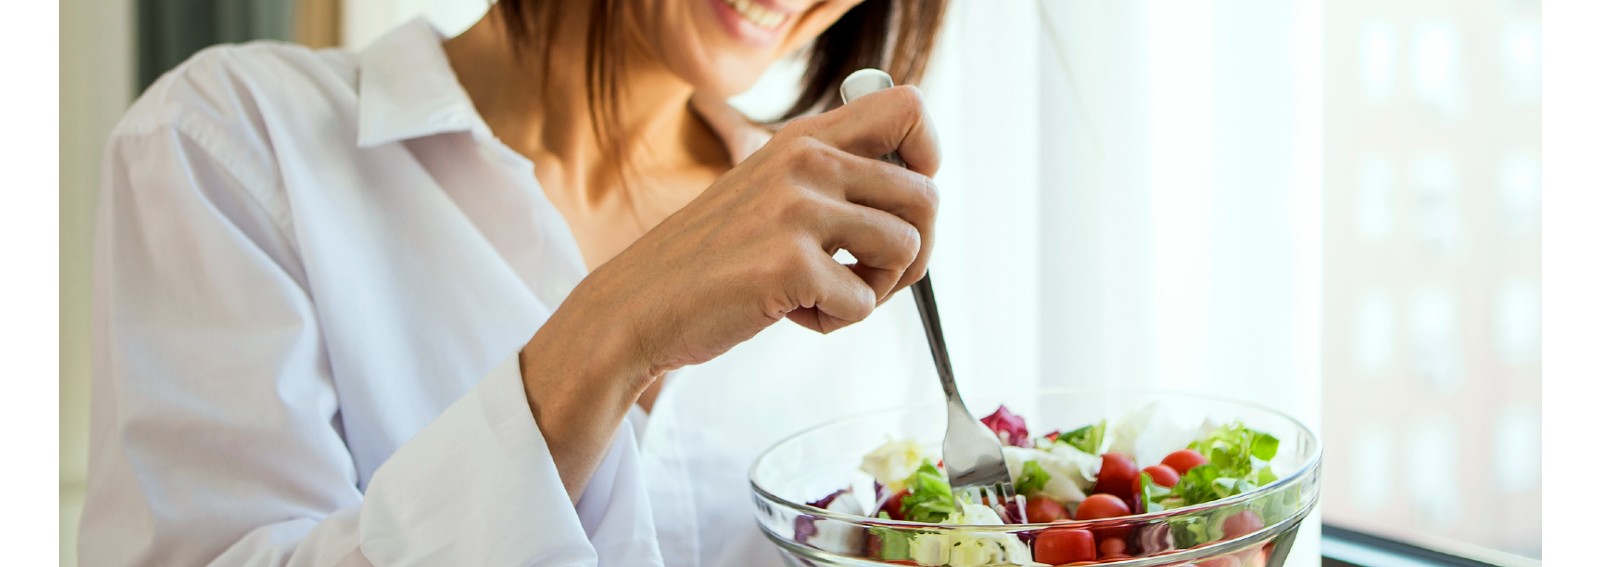 intermittent-fasting-salad-diet-health